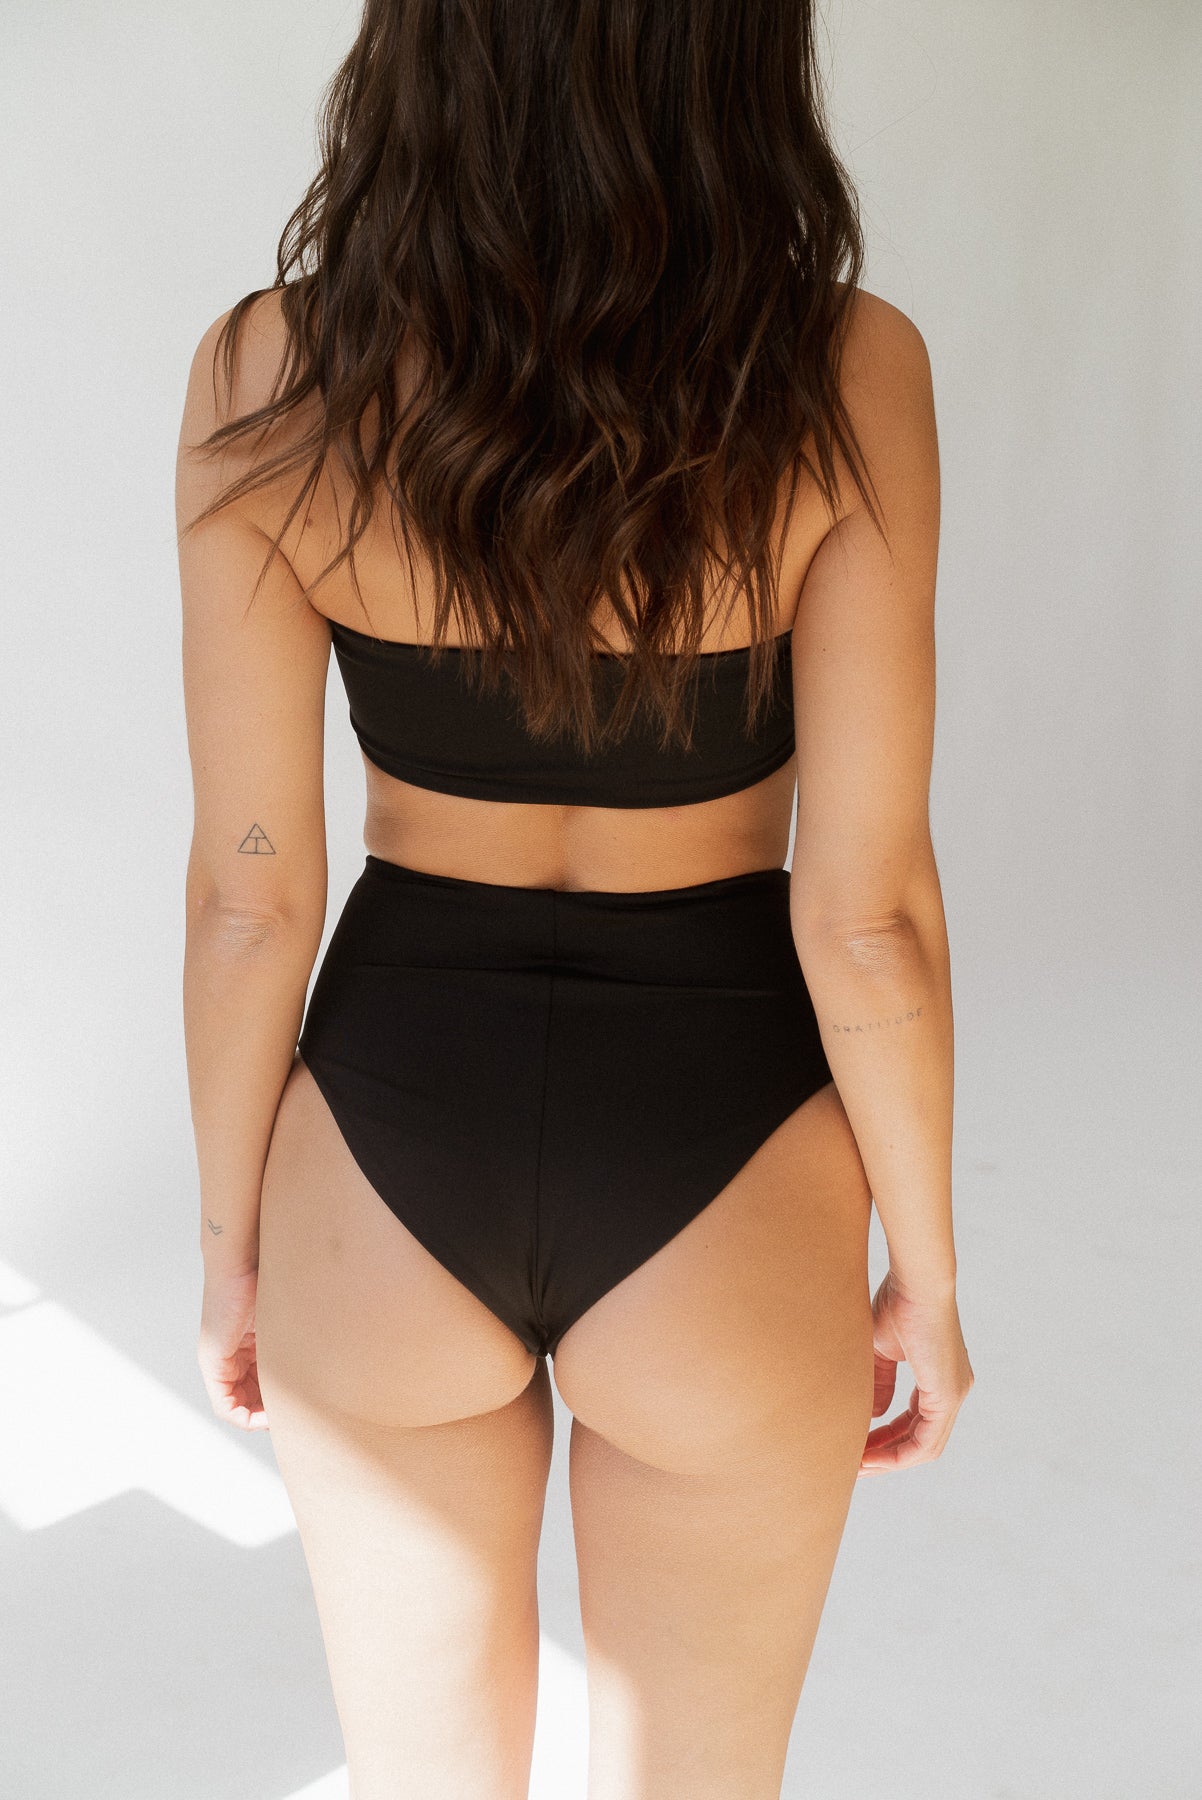 ASYOU high waist tanga mesh bikini bottoms in black